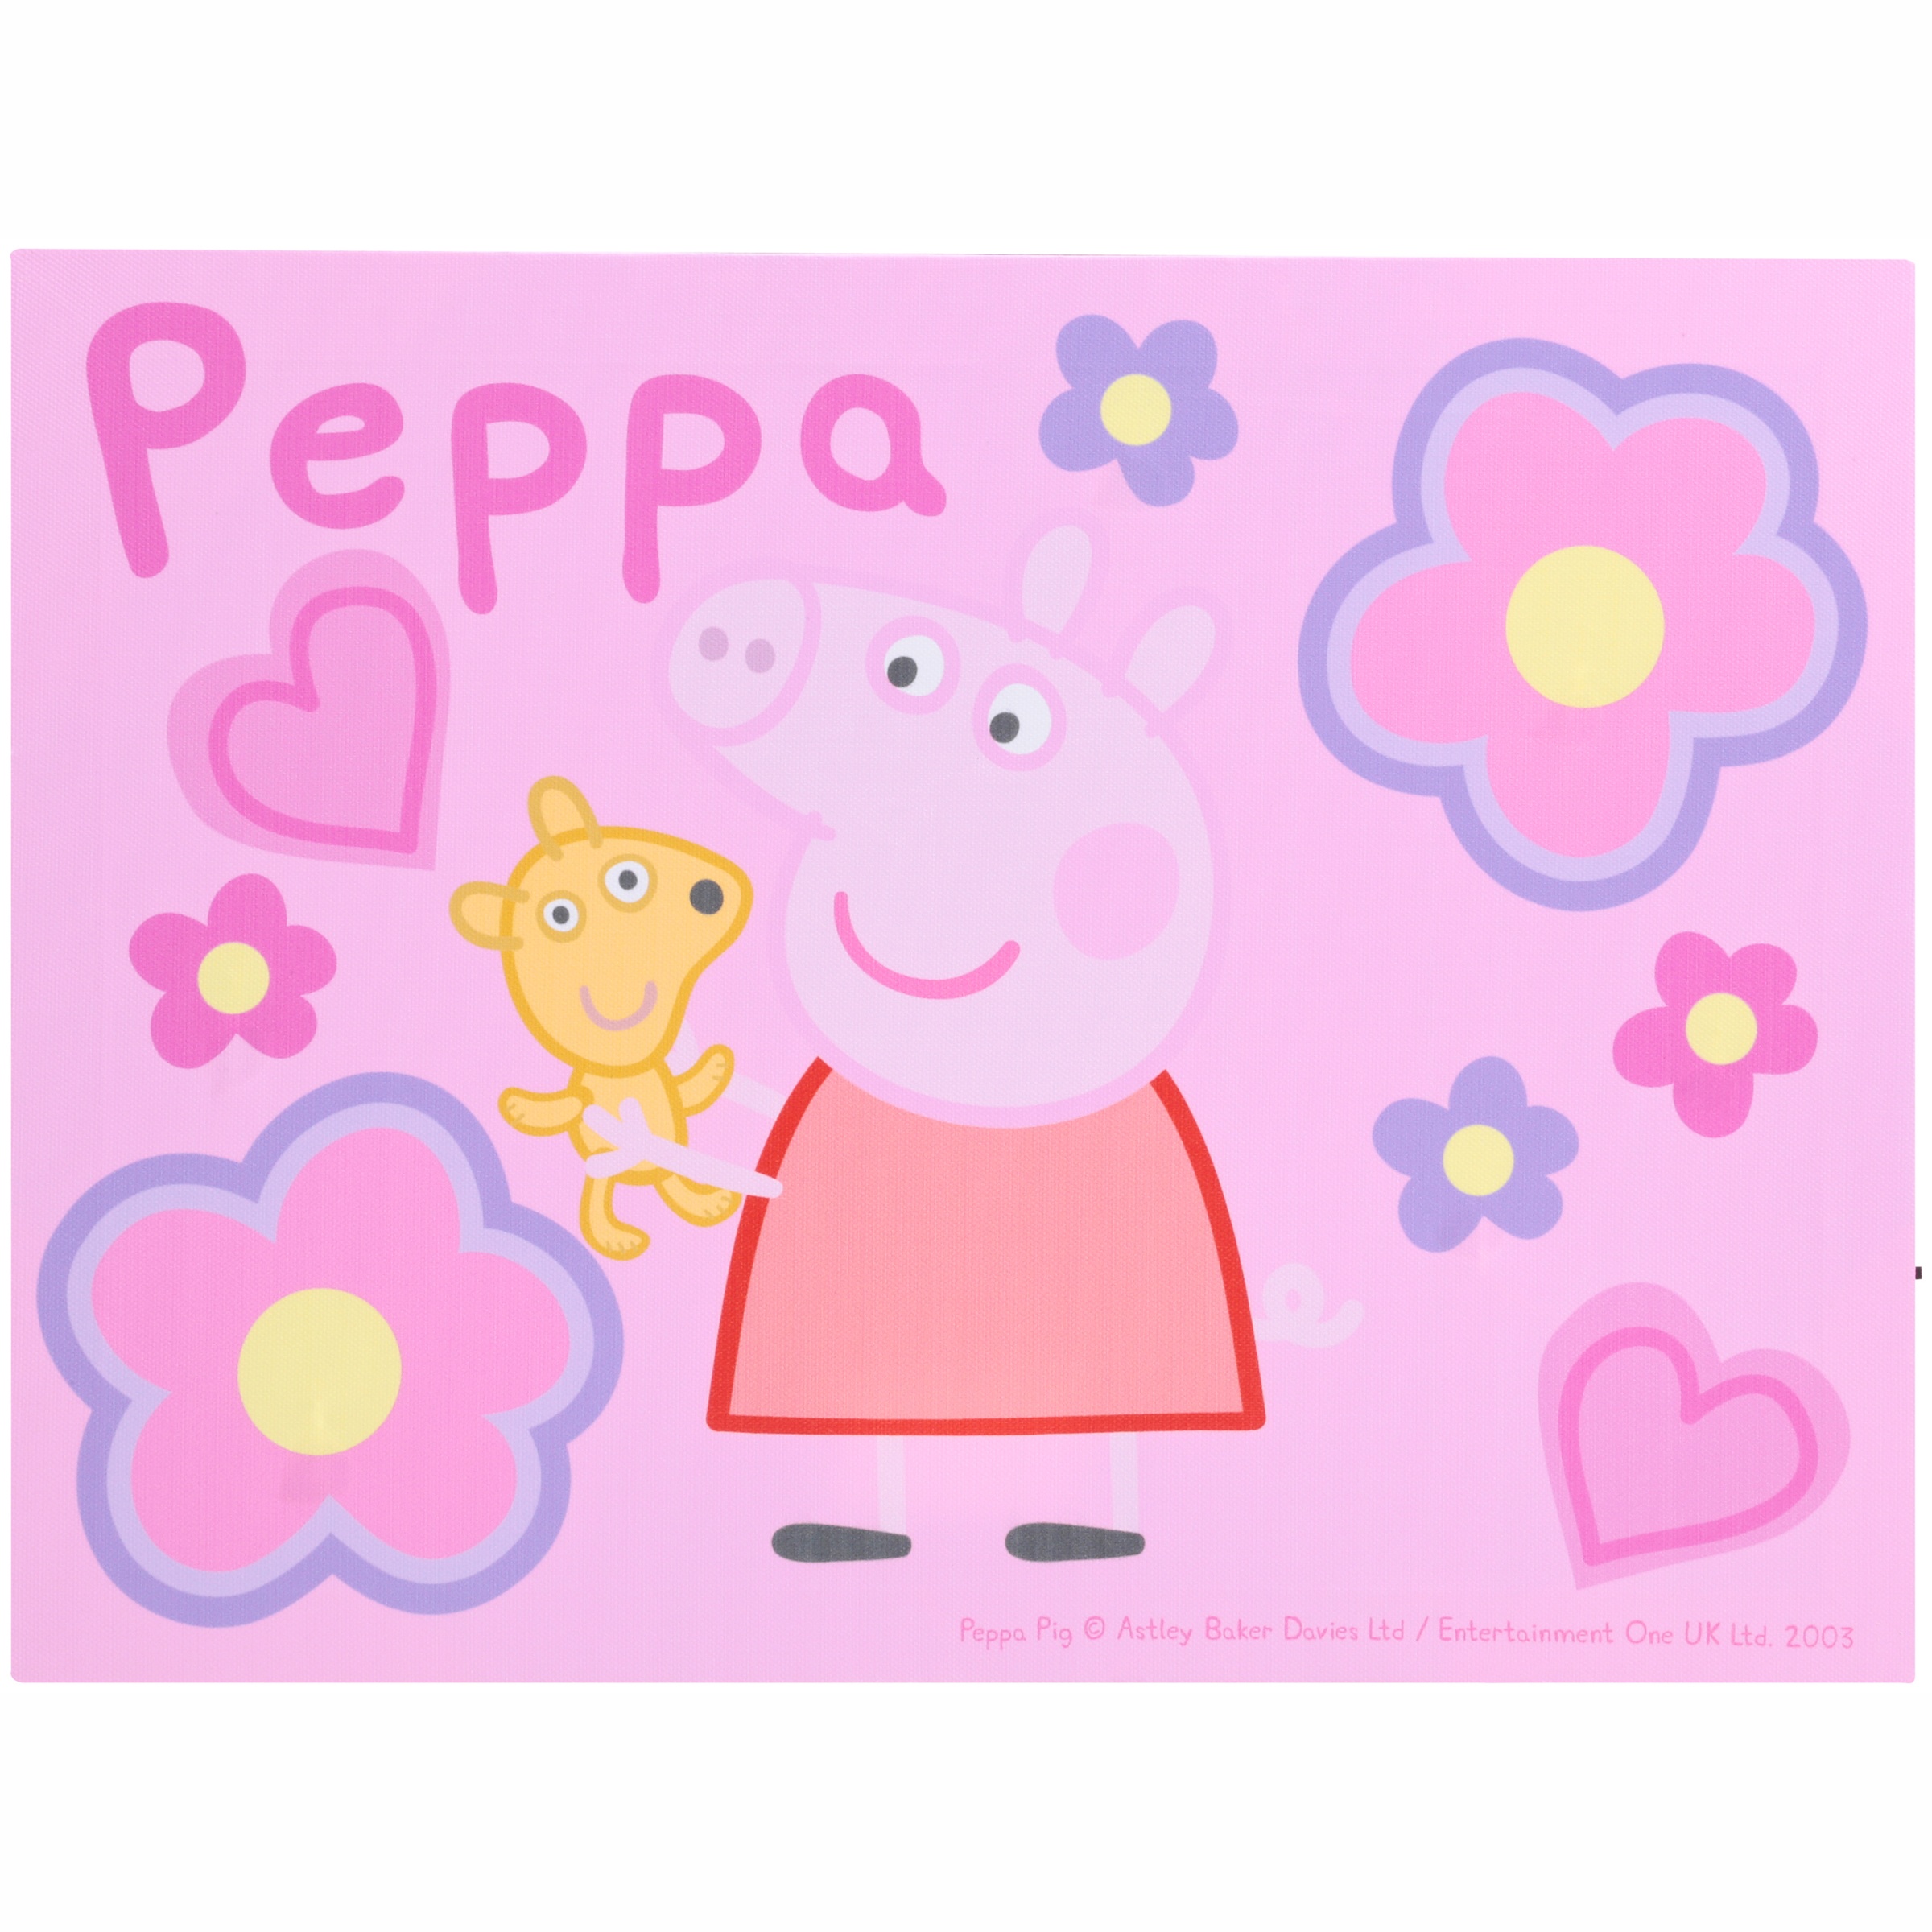 Peppa Pig LED Canvas Wall Art - image 2 of 6